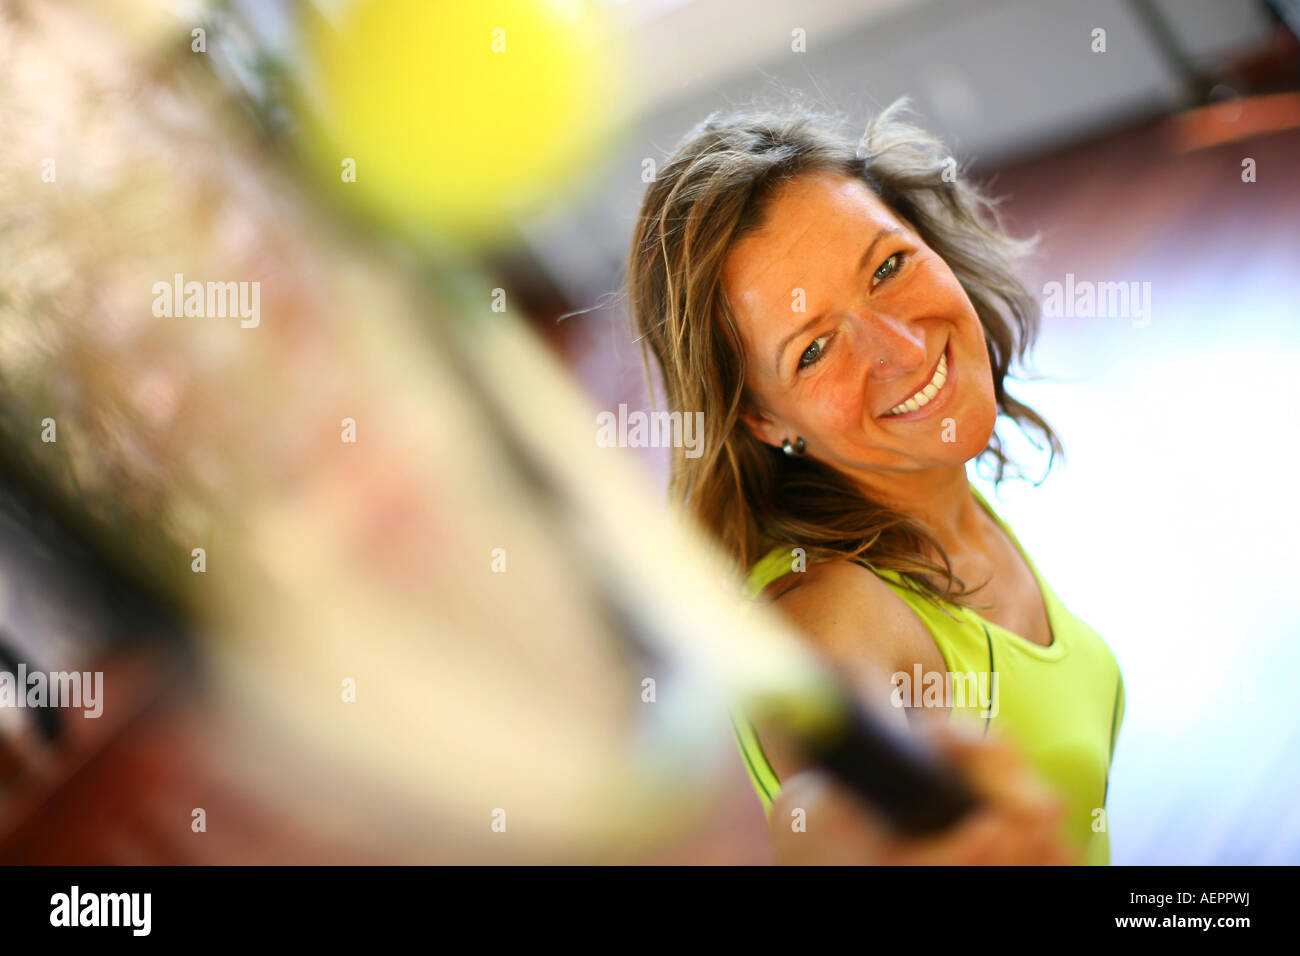 Junge Frau spielt mit Tennisschlaeger und Tennisball , Donna con tennisracket e tennisball Foto Stock